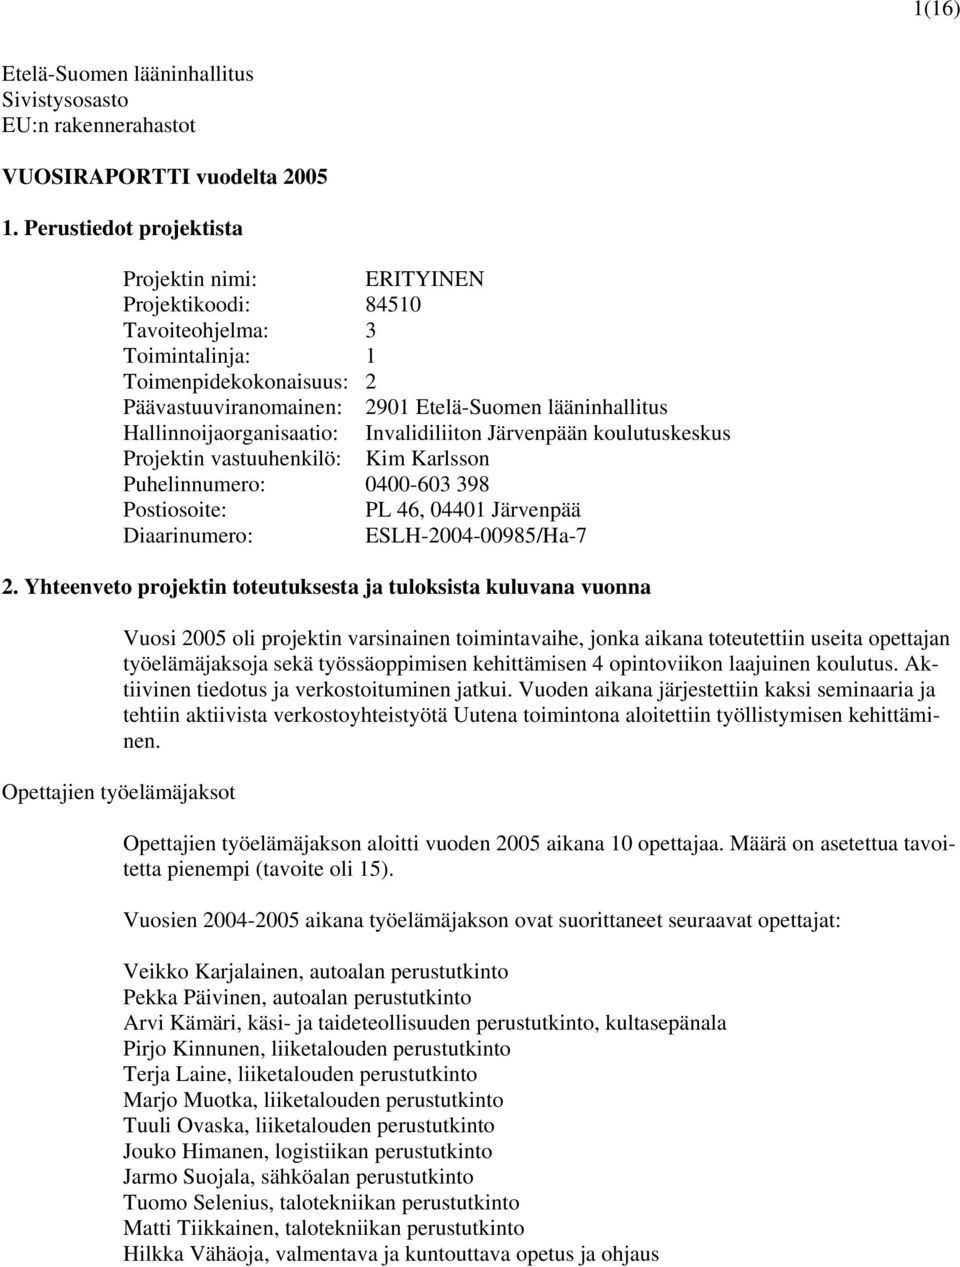 Hallinnoijaorganisaatio: Invalidiliiton Järvenpään koulutuskeskus Projektin vastuuhenkilö: Kim Karlsson Puhelinnumero: 0400-603 398 Postiosoite: PL 46, 04401 Järvenpää Diaarinumero: